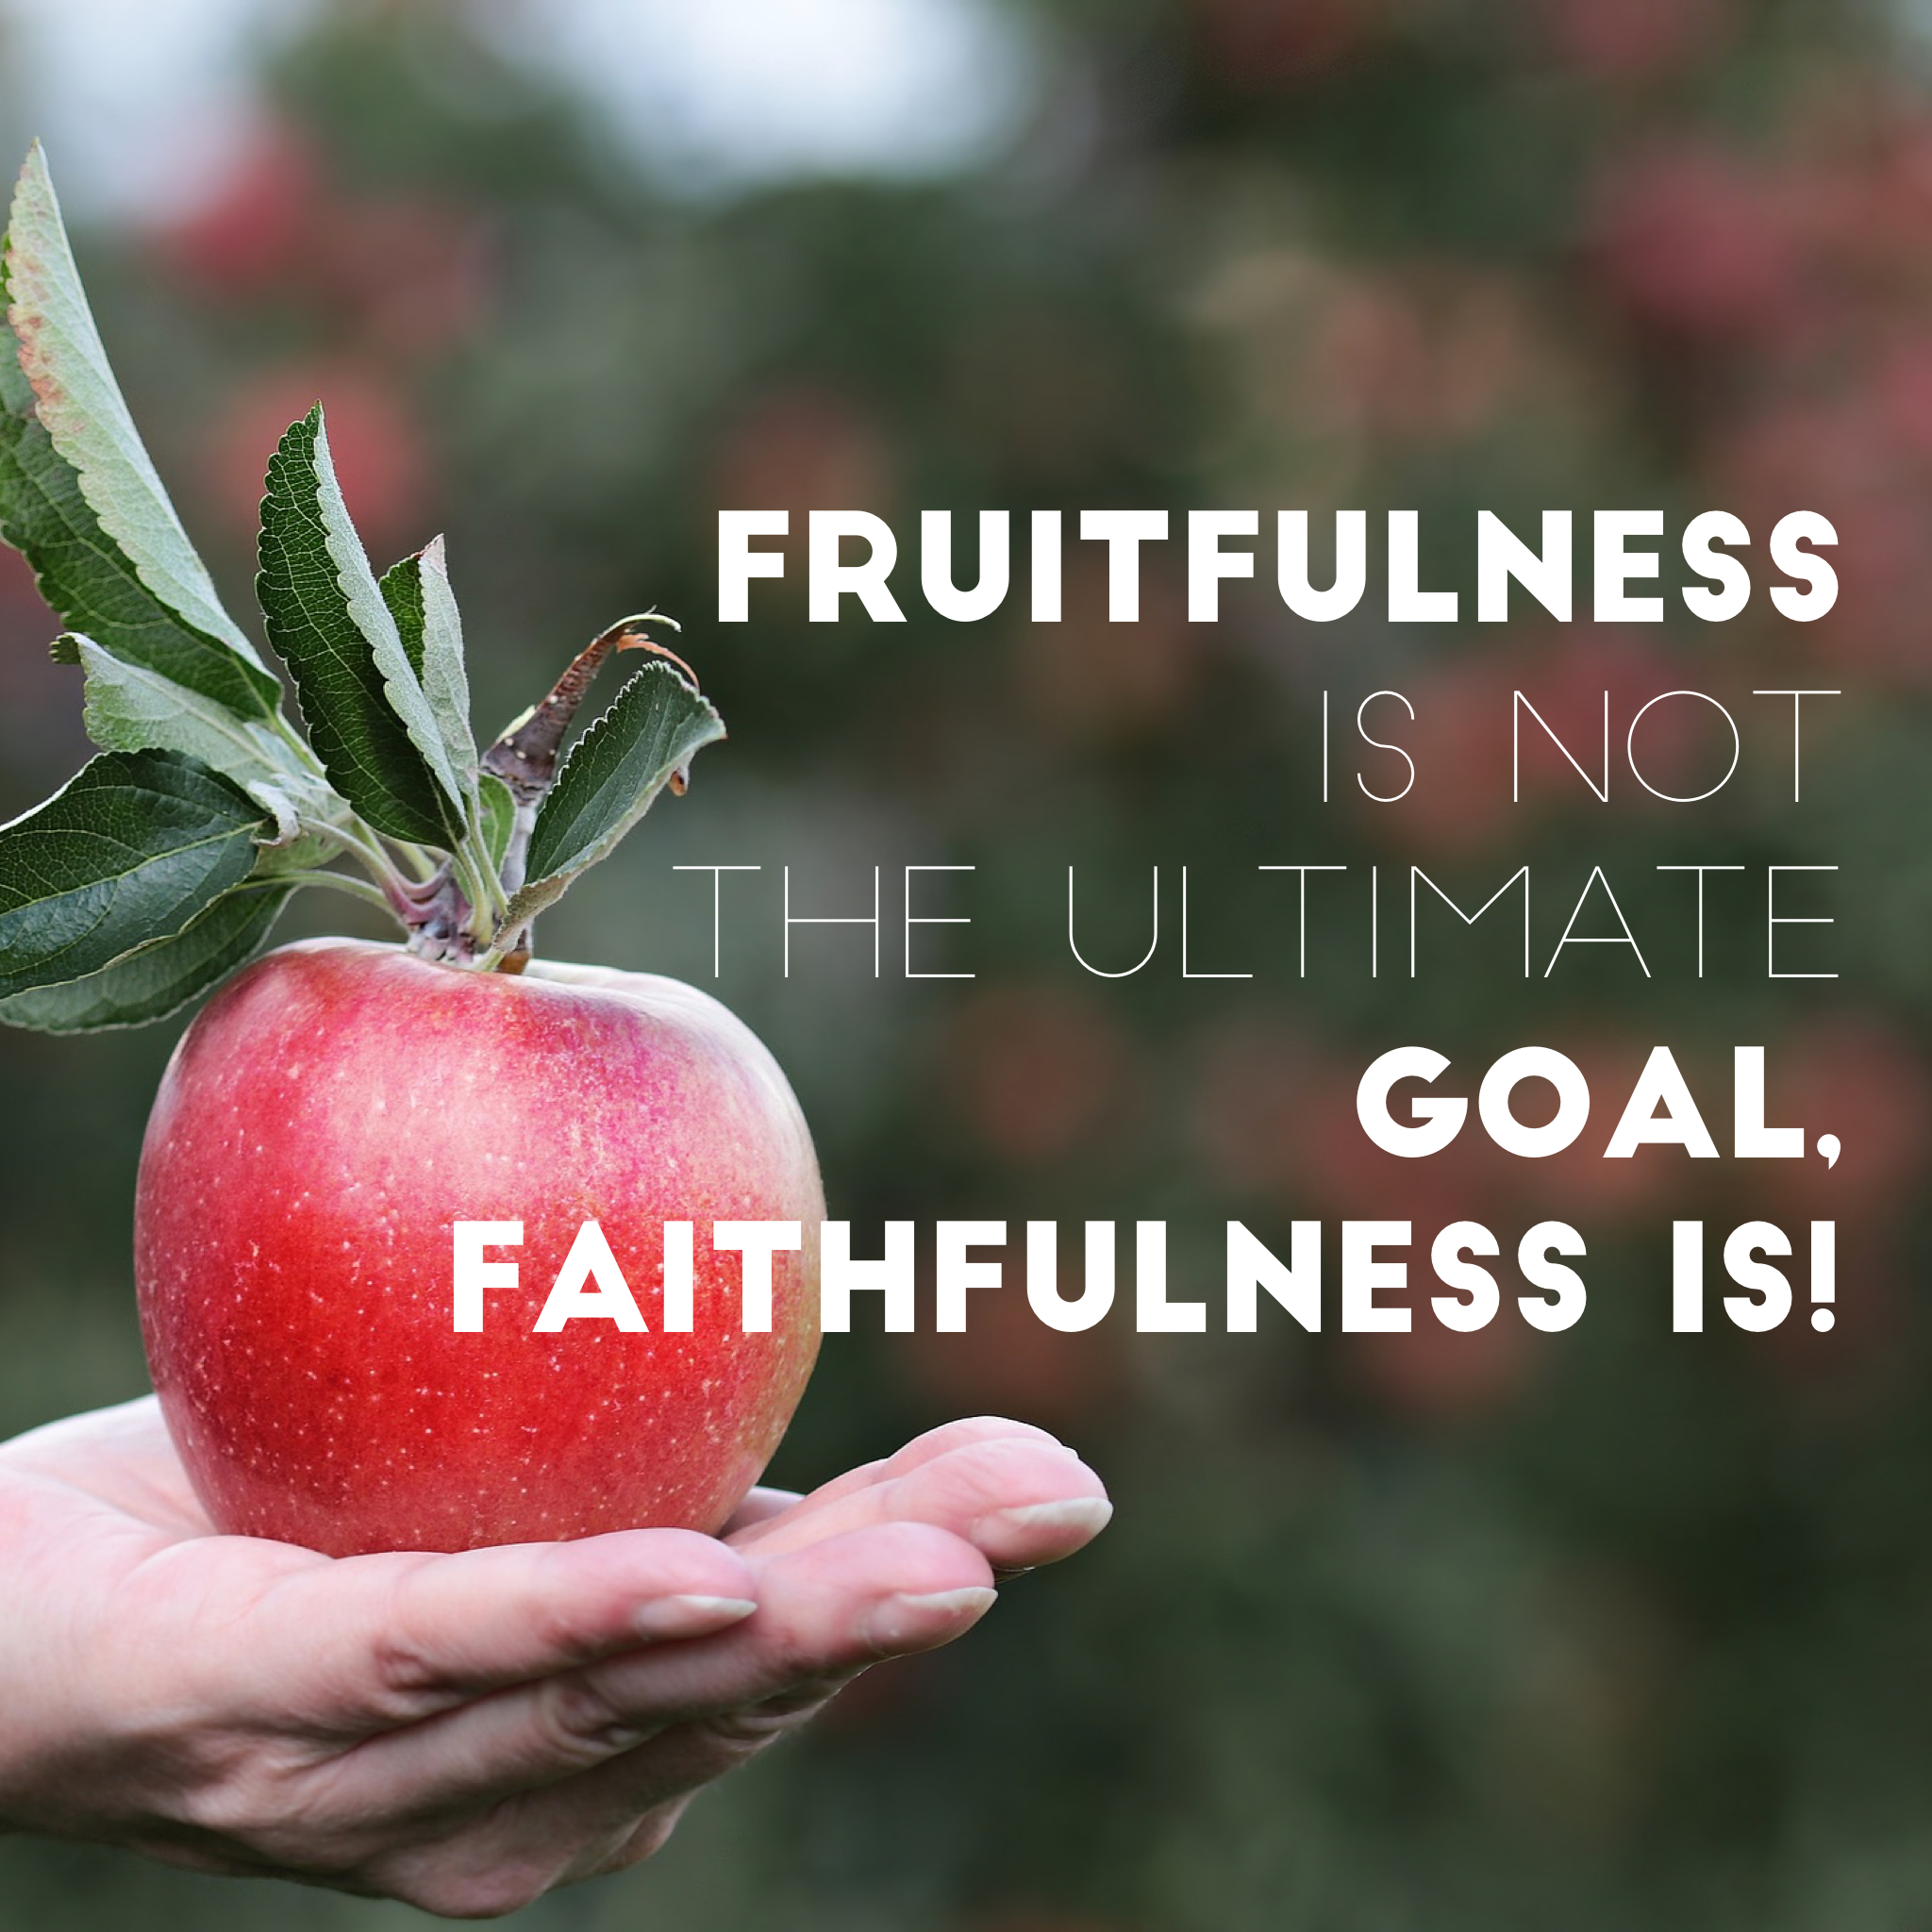 Should We Be Fruitful Or Should We Be Faithful? - JeffManess.com